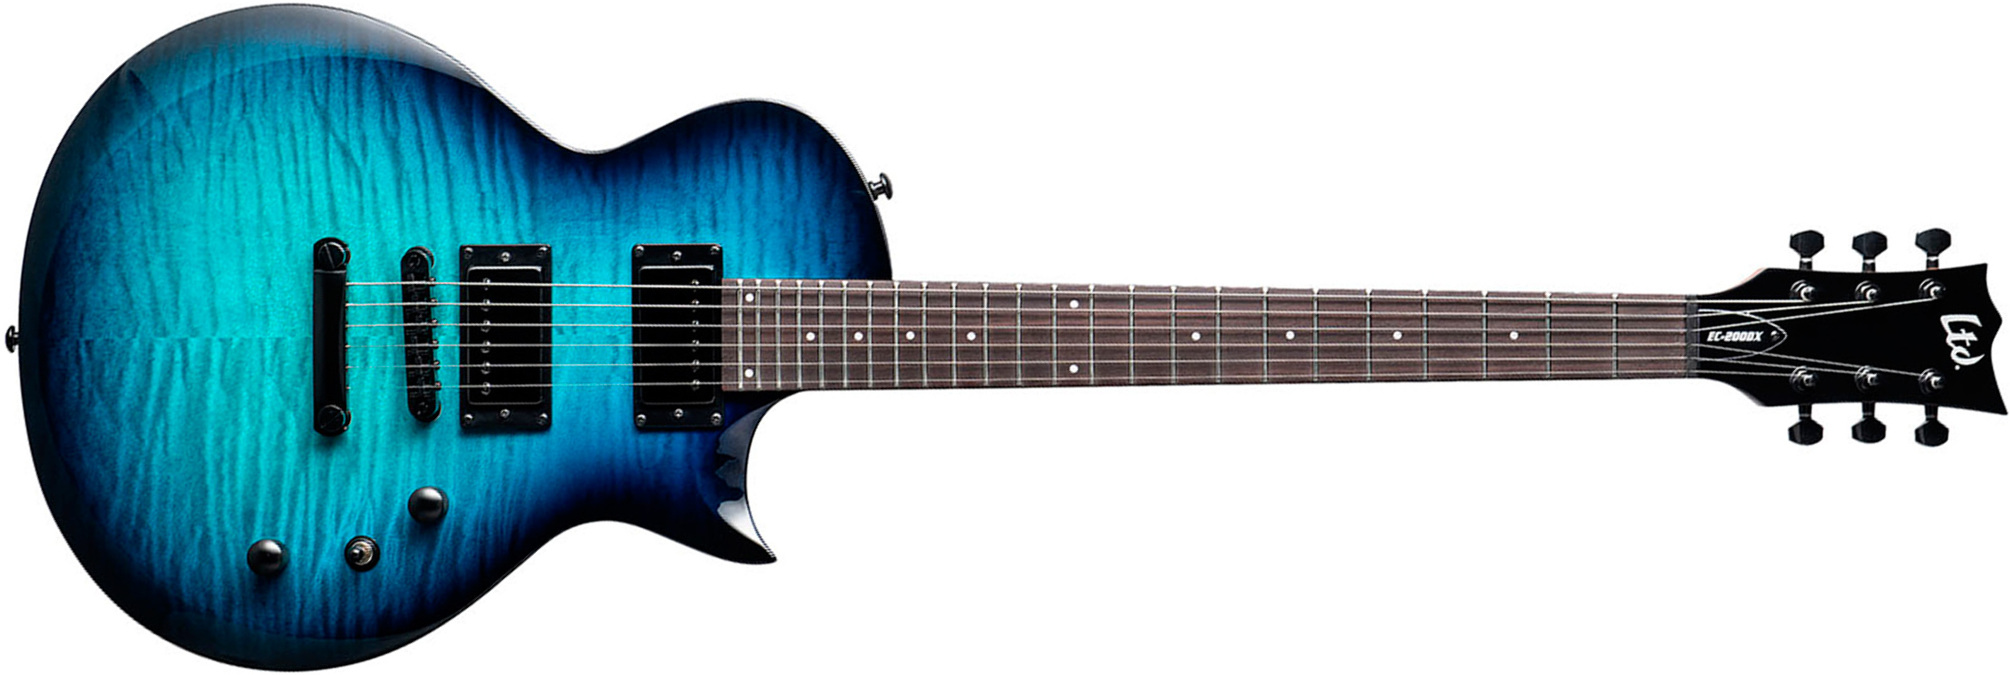 Ltd Ec200dx 2h Ht Rw - Blue Burst - Enkel gesneden elektrische gitaar - Main picture